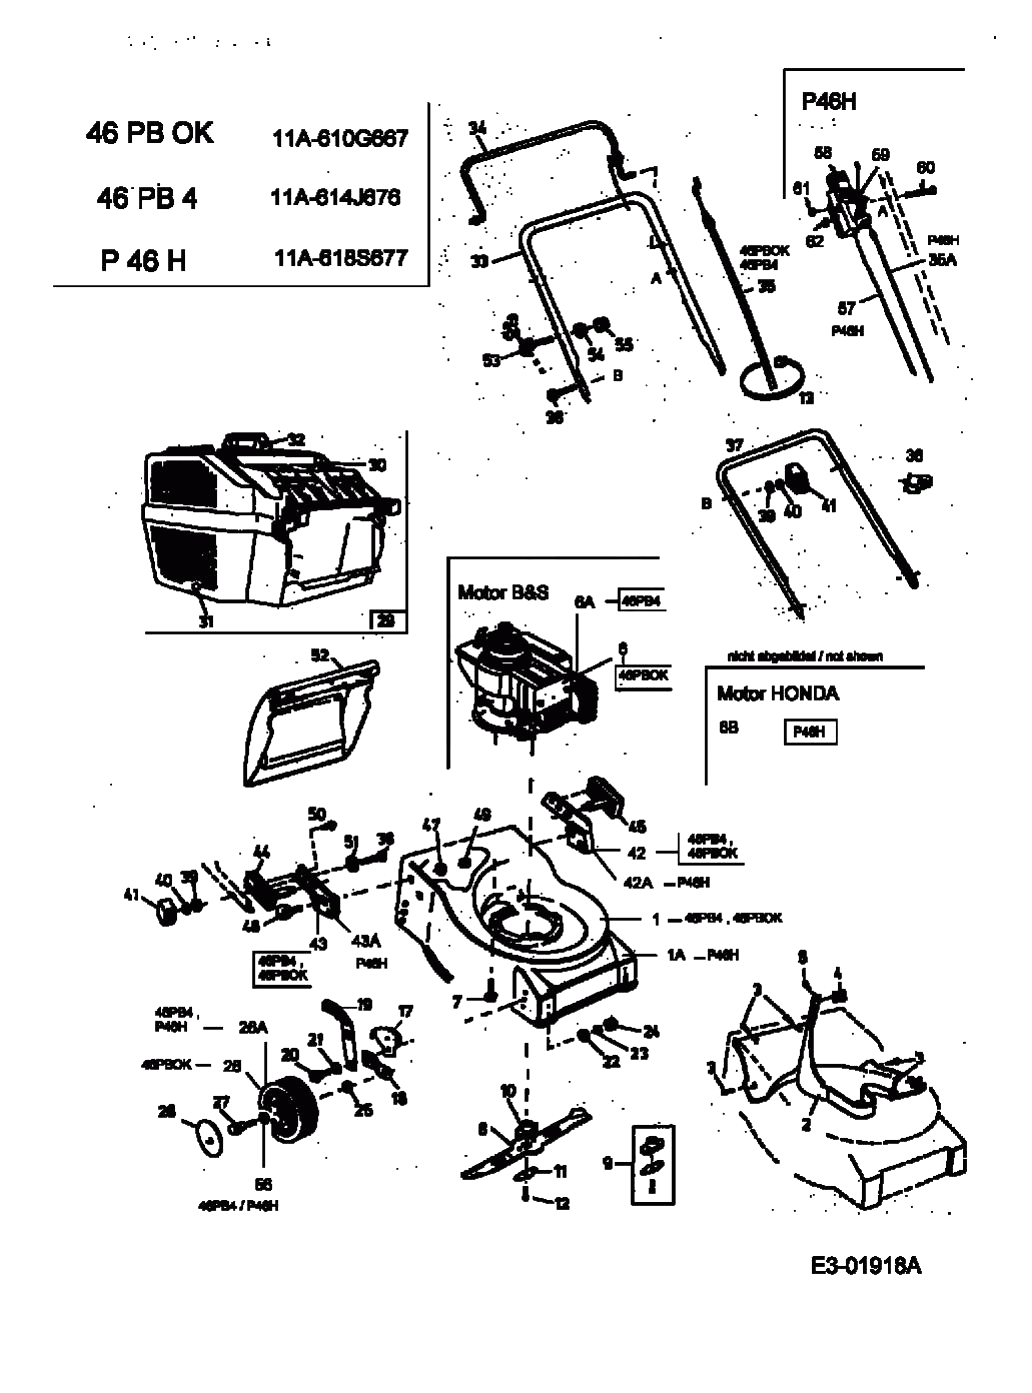 MTD Артикул 11A-618S677 (год выпуска 2004). Основная деталировка